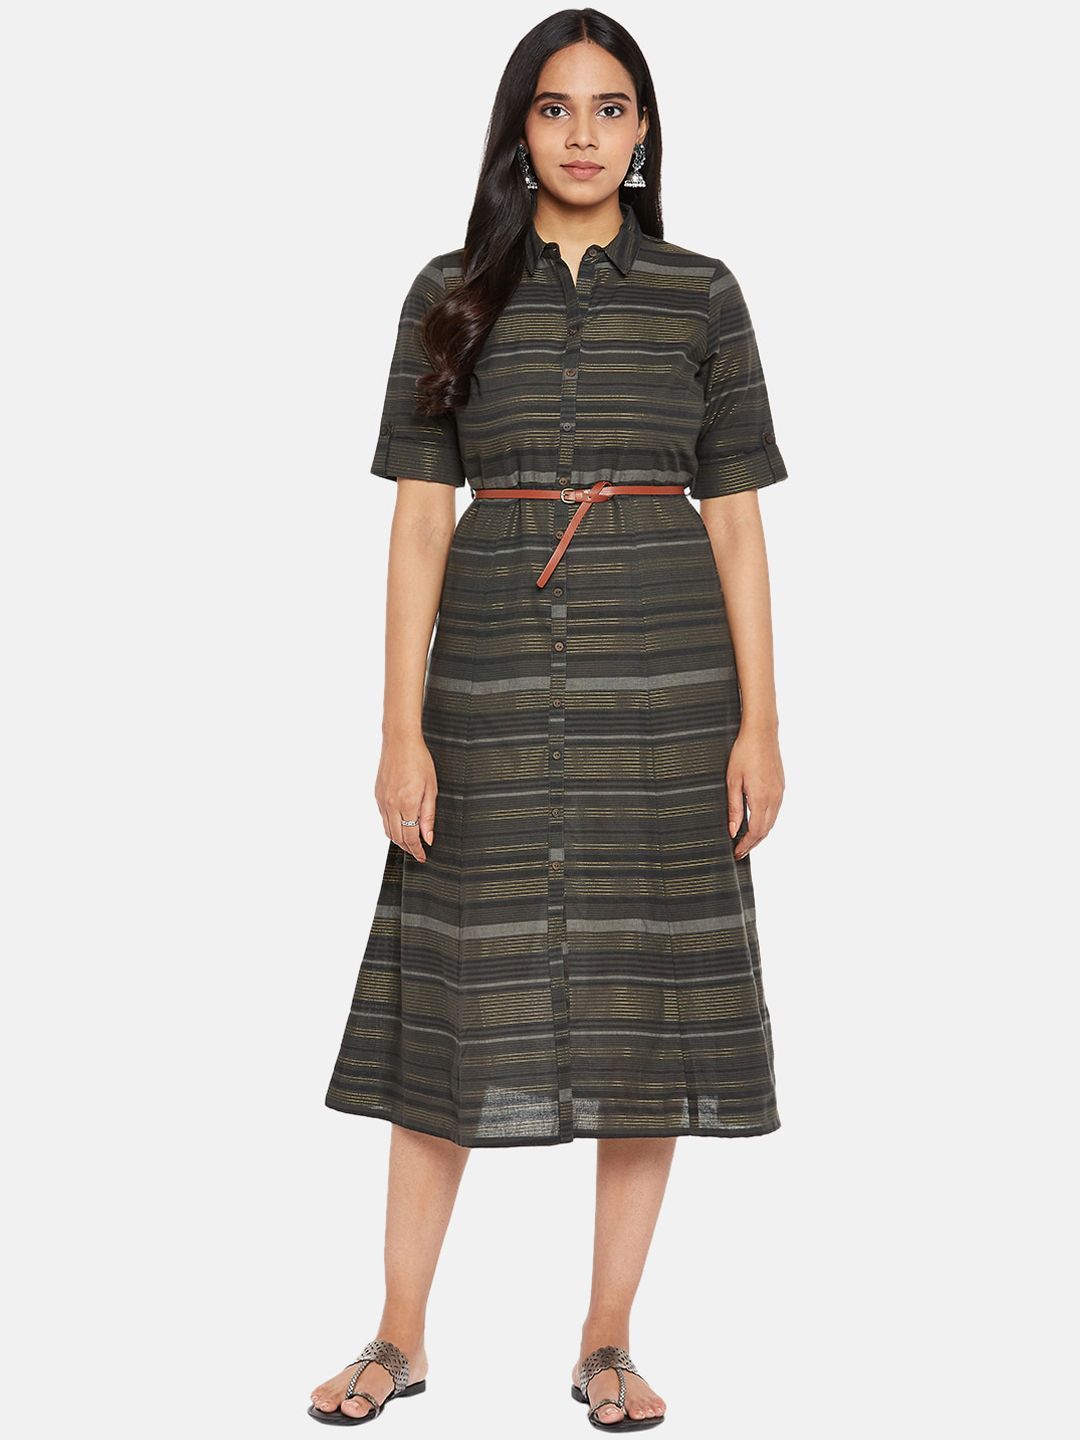 AKKRITI BY PANTALOONS Olive Green & Charcoal Grey Striped Shirt Midi Dress Price in India